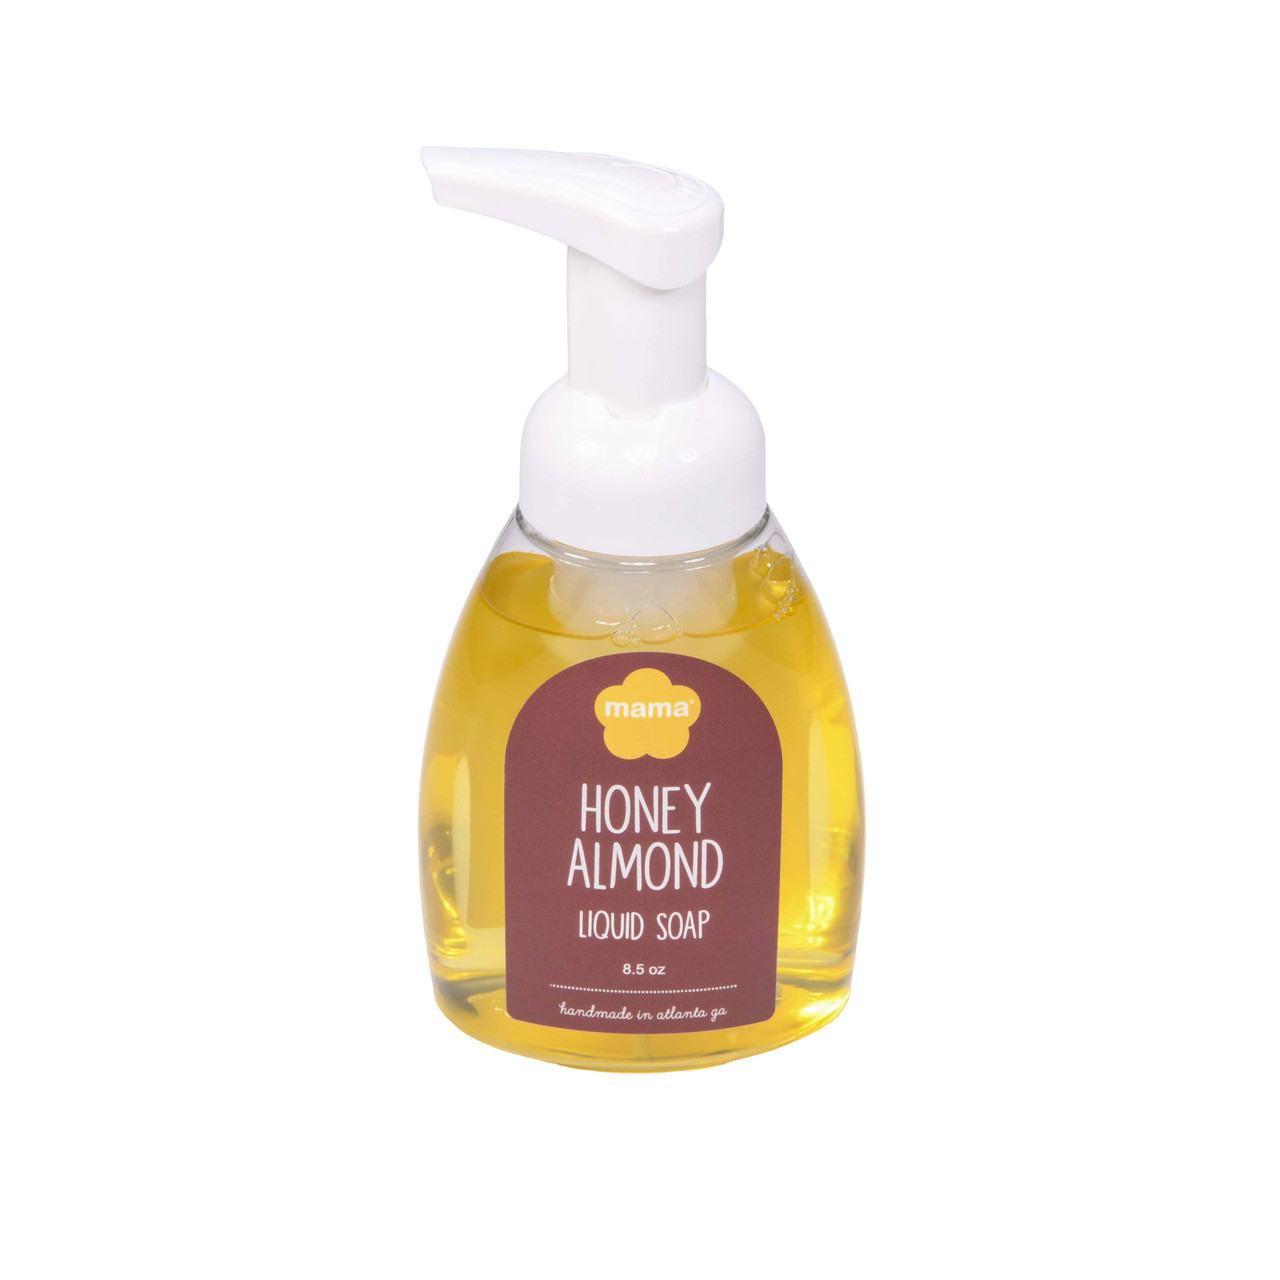 Honey Almond Liquid Soap | Mama Bath + Body